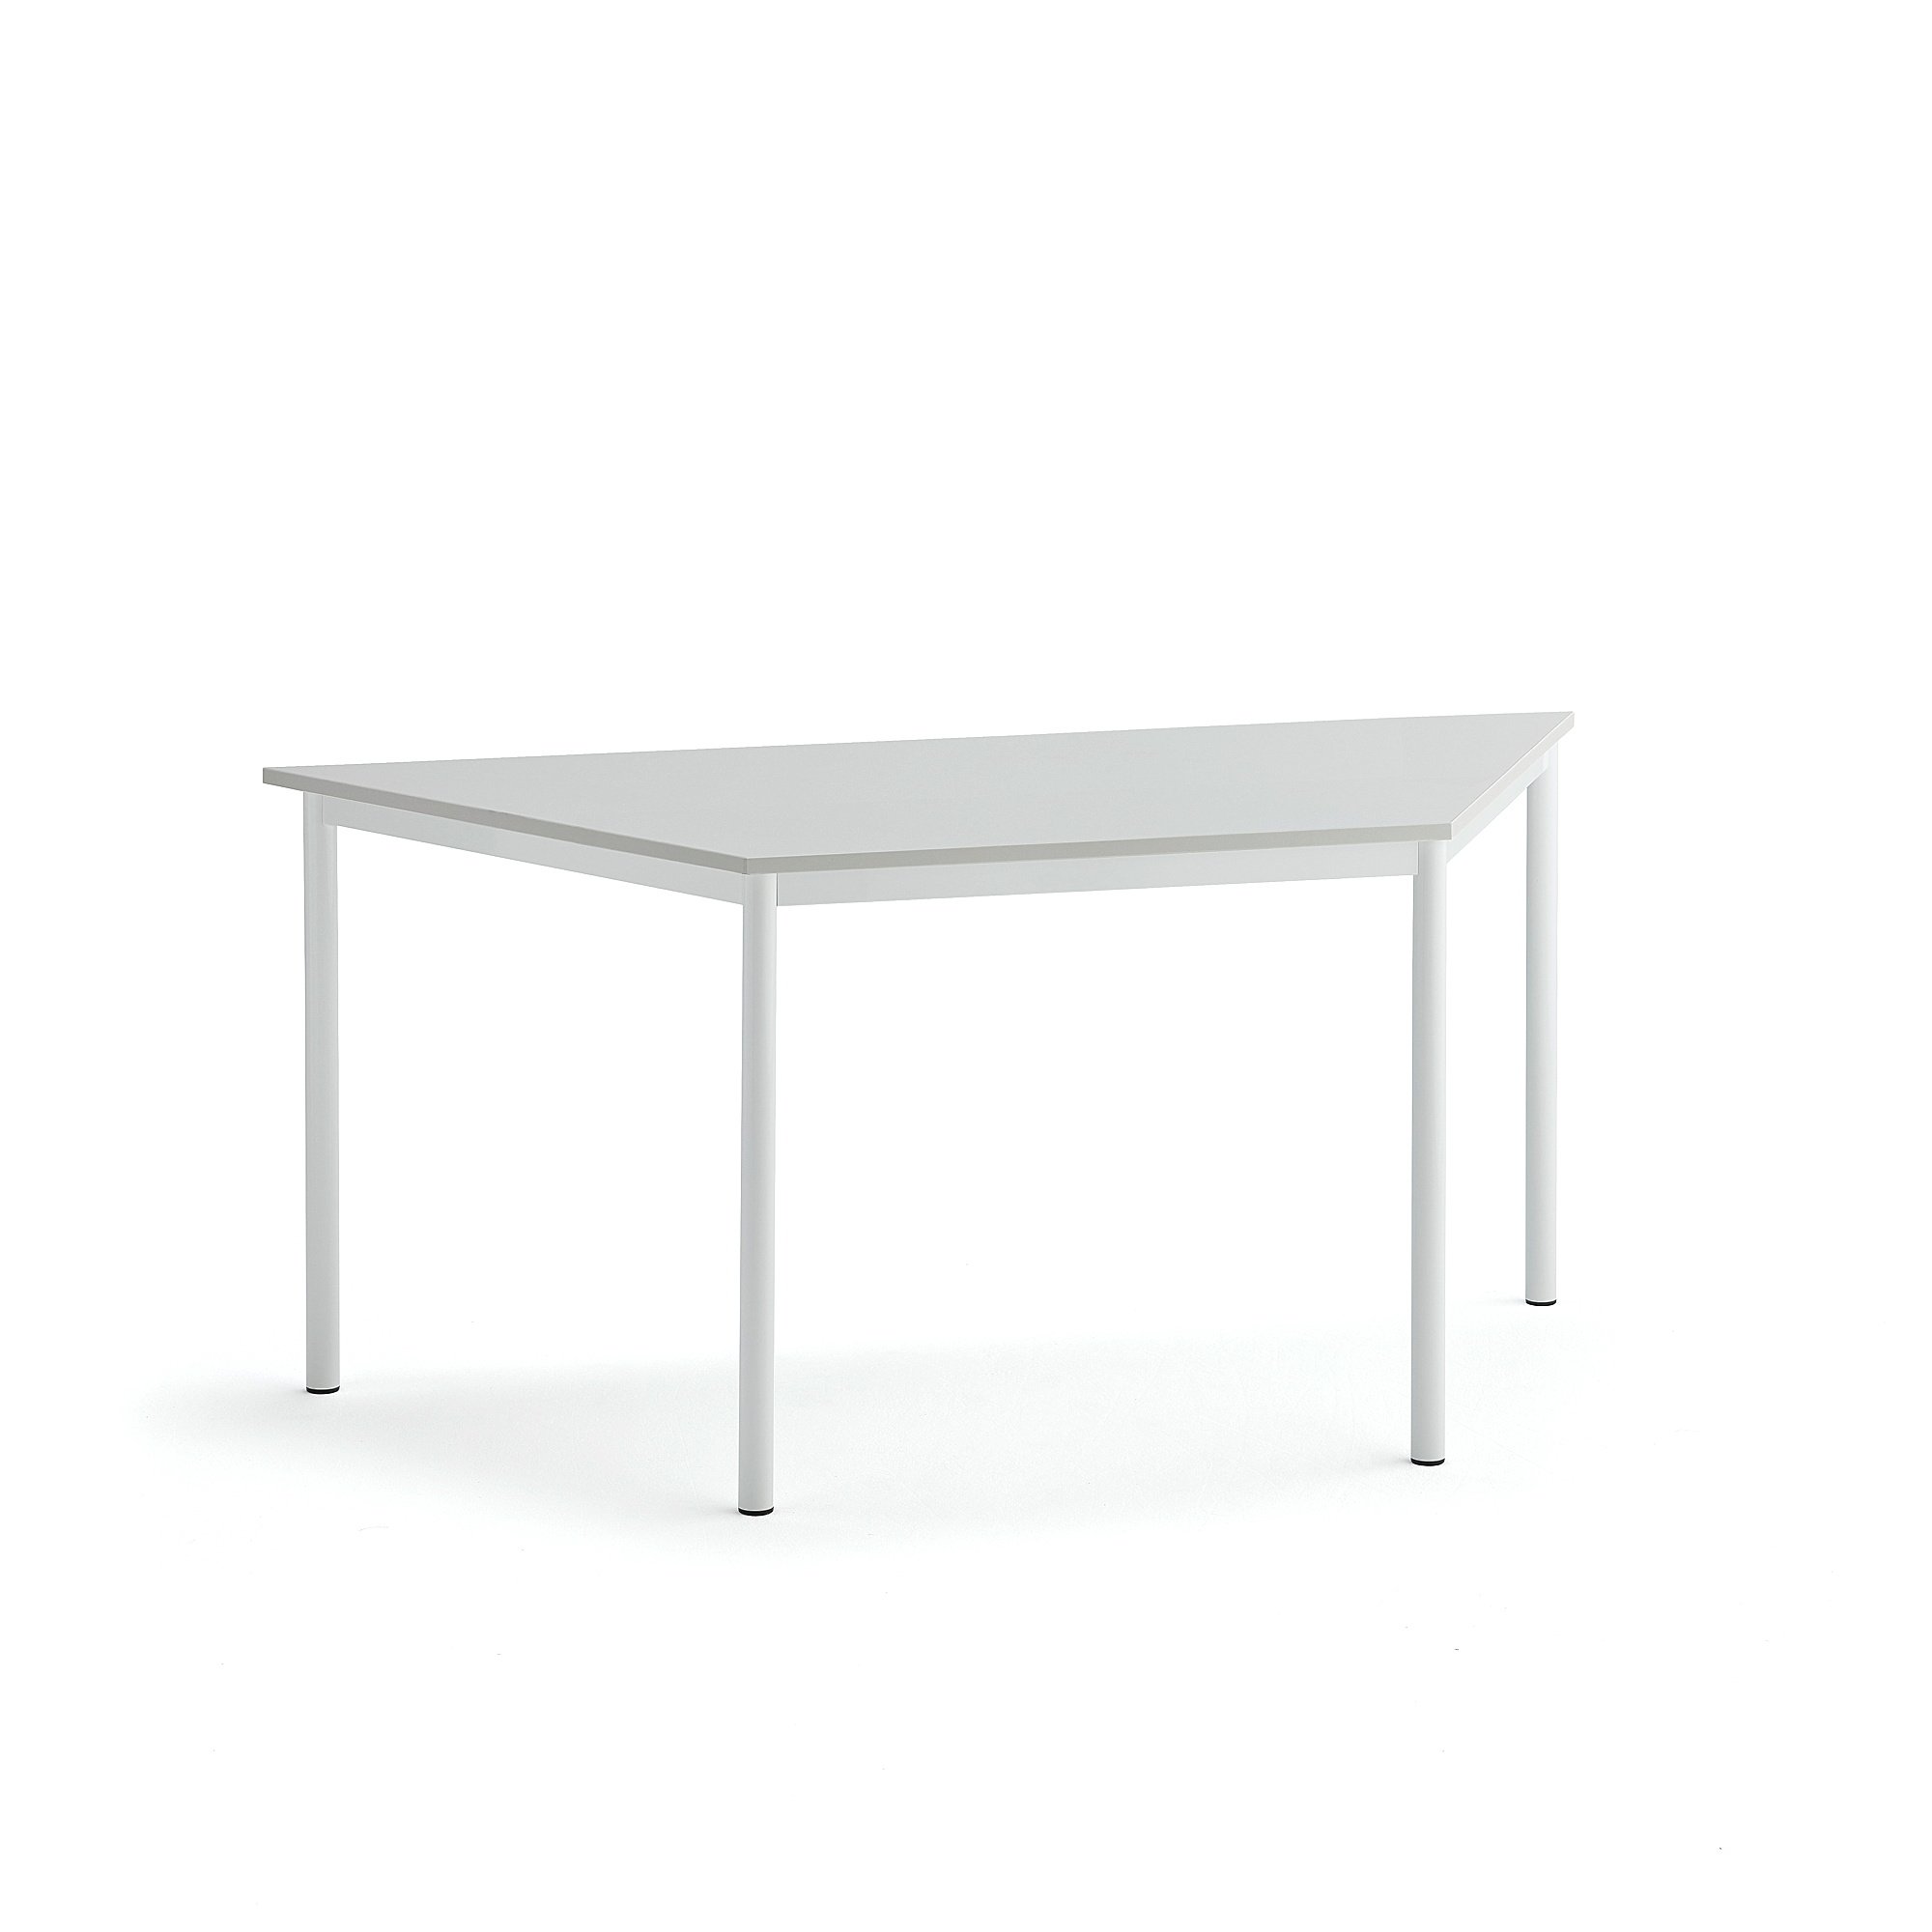 Stôl SONITUS TRAPETS, 1600x800x720 mm, HPL - šedá, biela